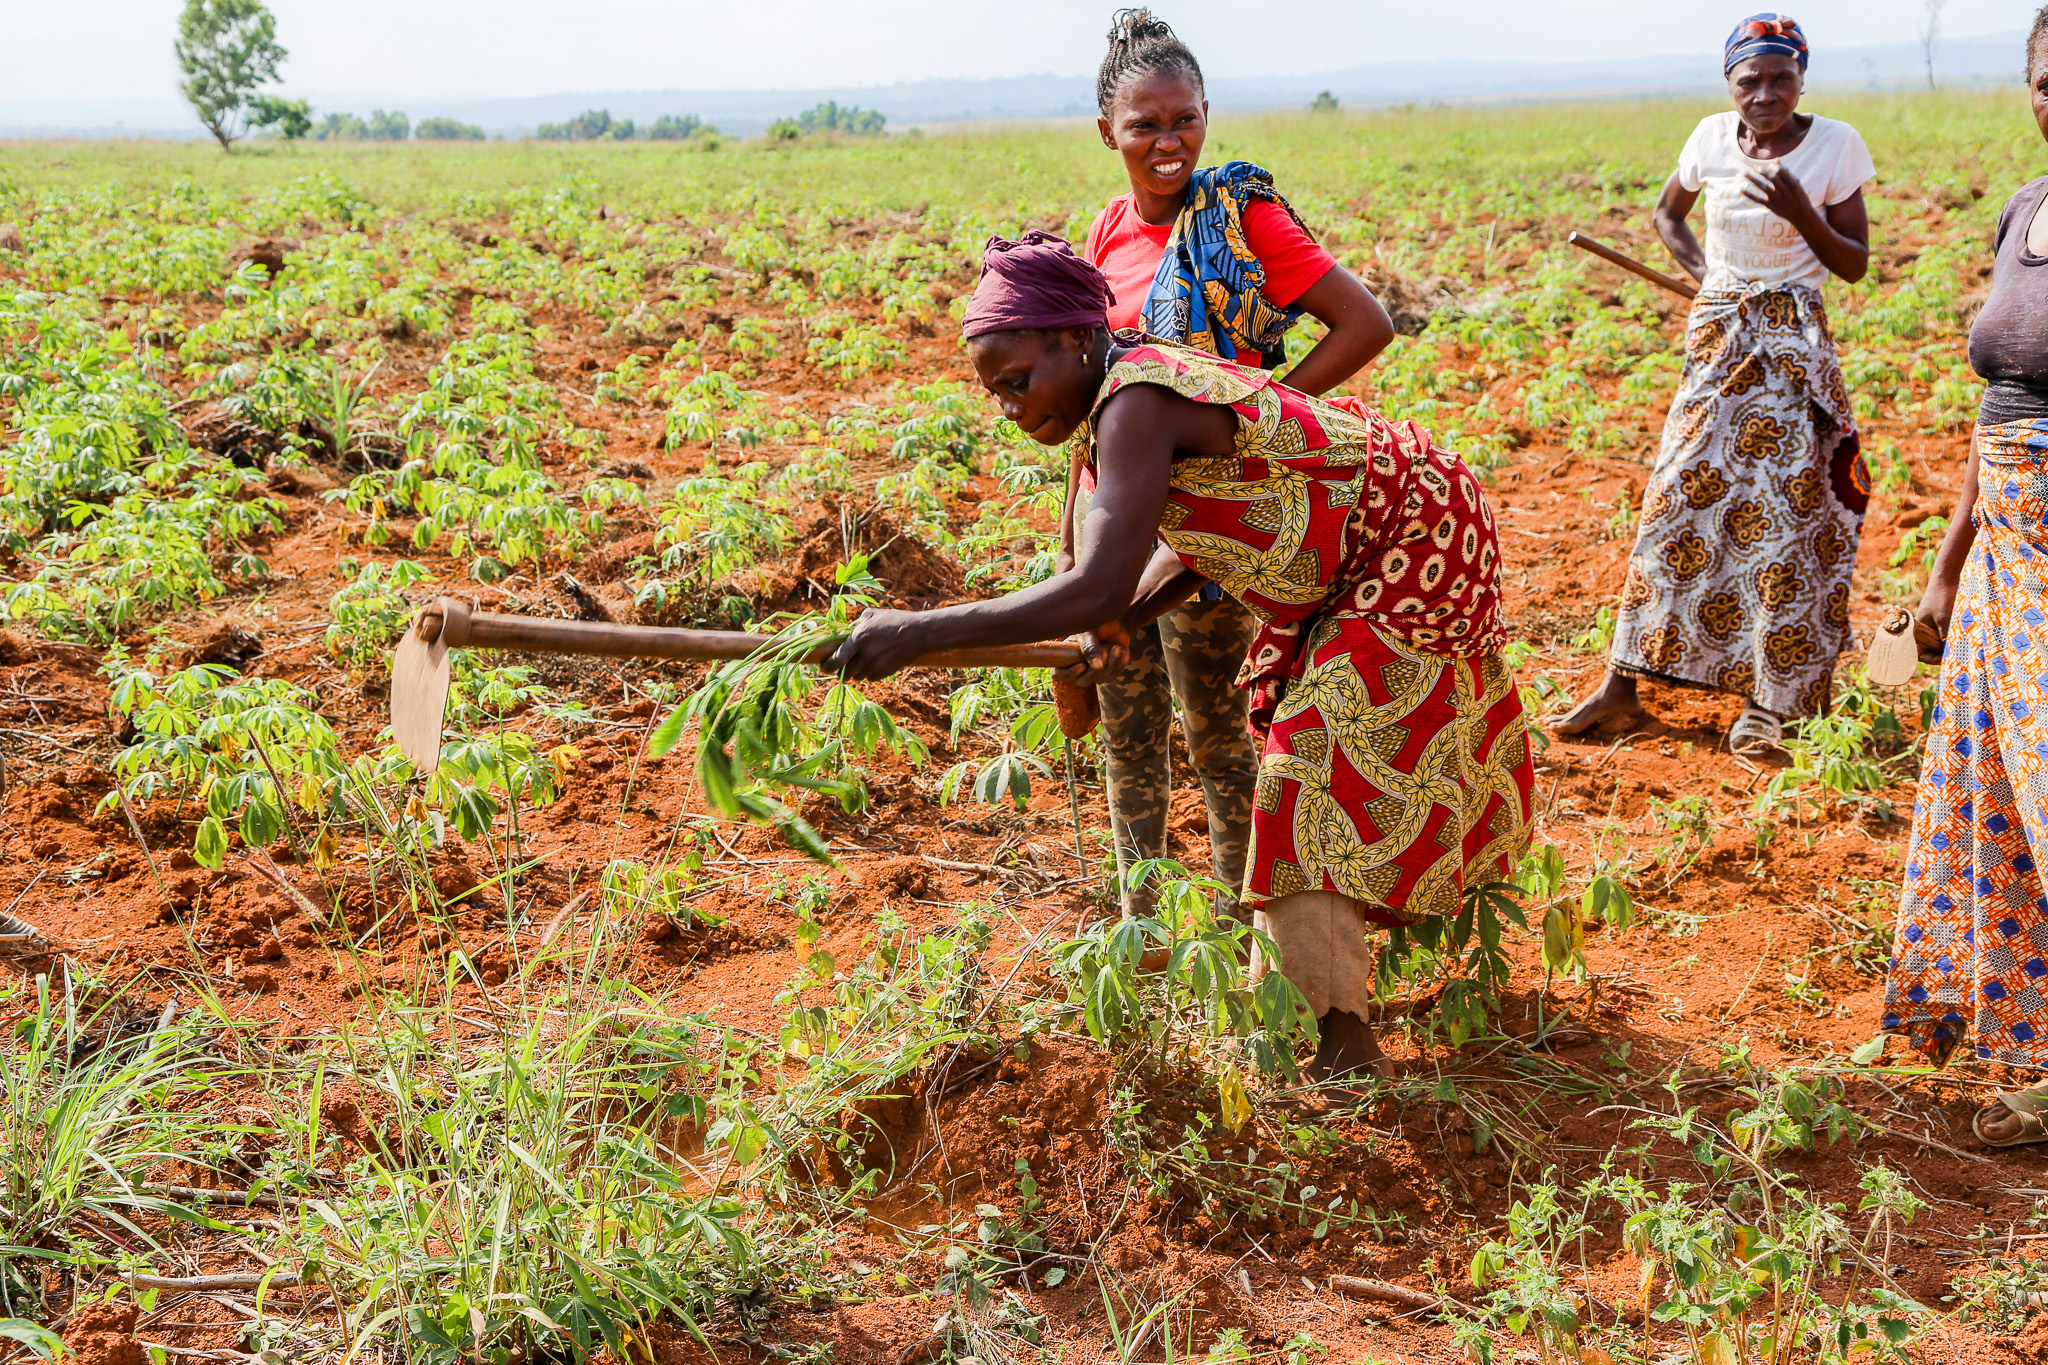 The women work in the fields from sunrise to sunset. Photo: UN Women / Marina Mestres Segarra